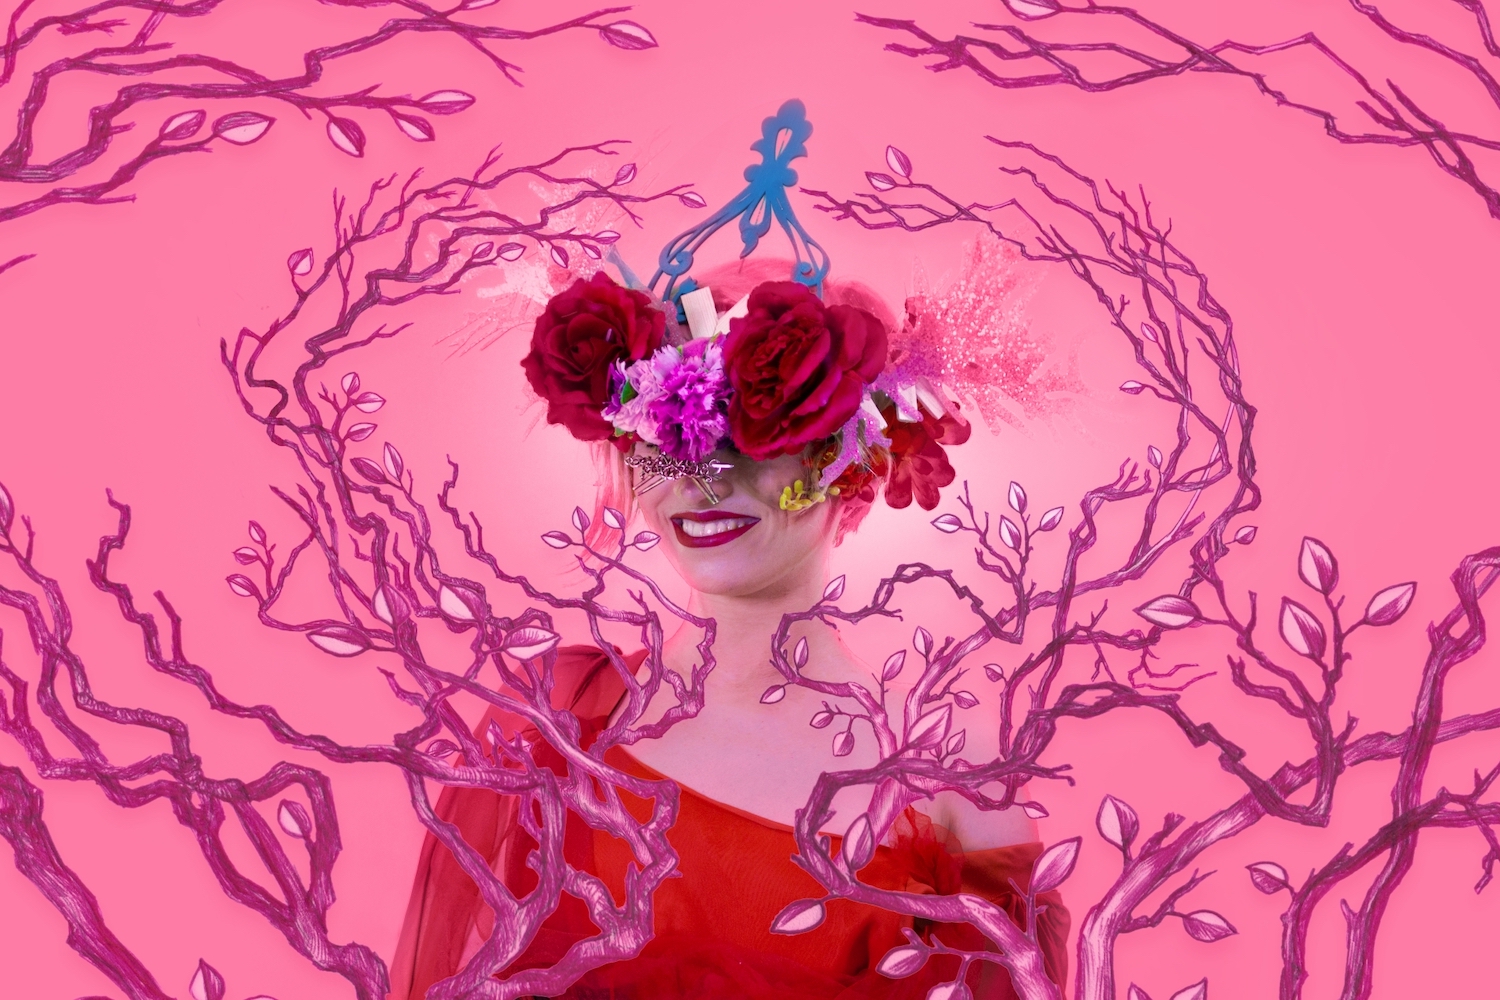 Waterflower in her video for “Love”.